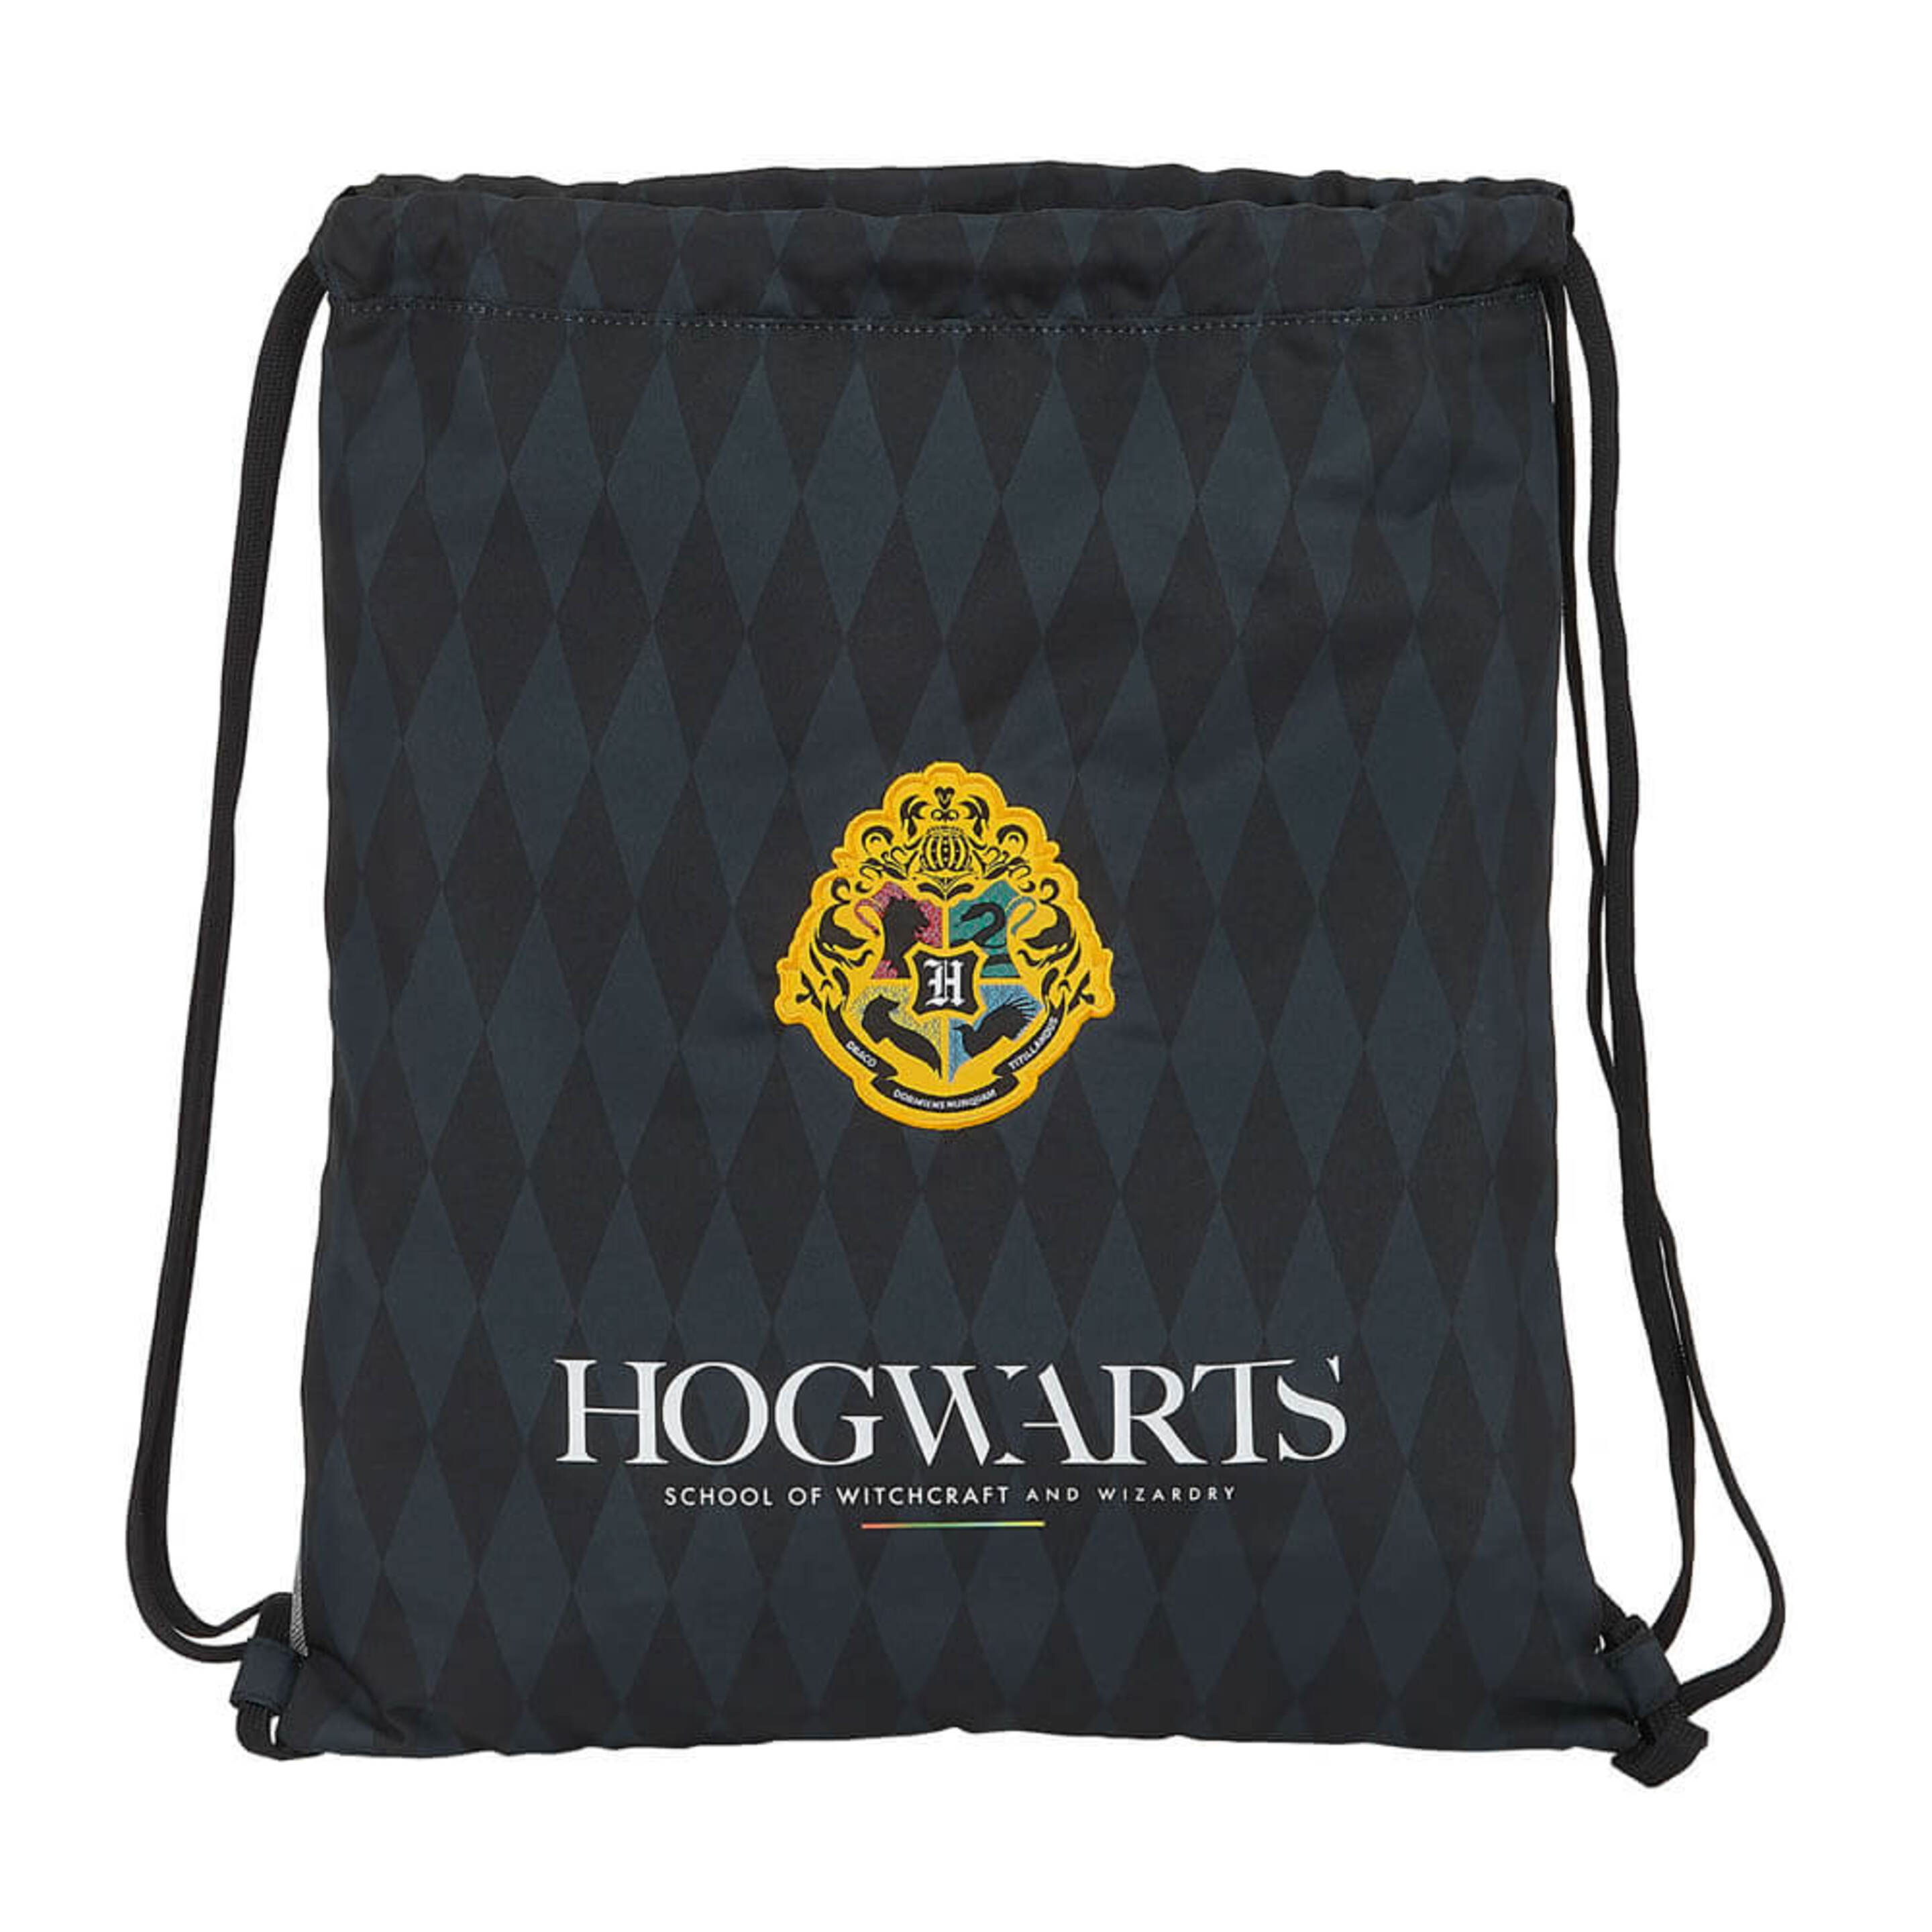 Safta Saco Plano Grande De Harry Potter Hogwarts, 350x400 Mm, Negro/gris - multicolor - 